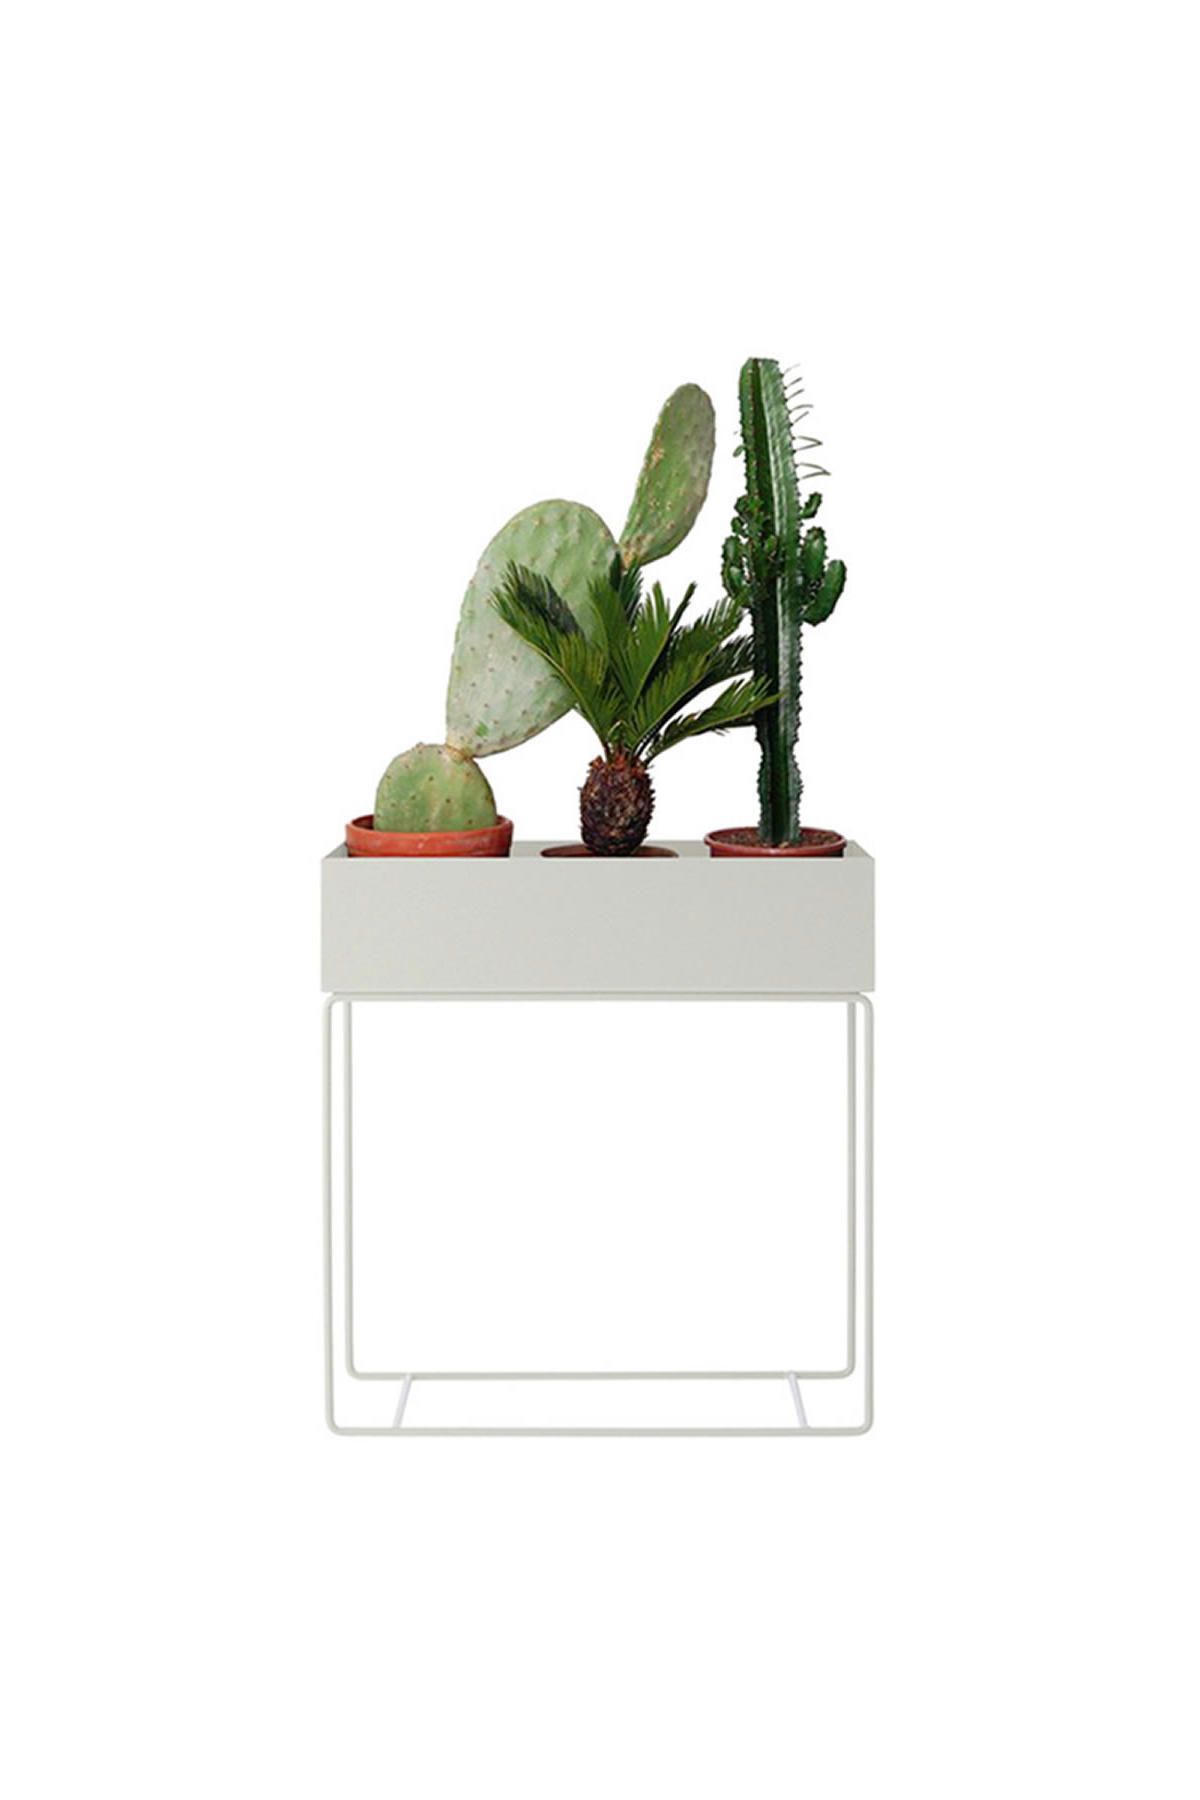 Miniminti Beyaz Metal Saksılık - Plant Box